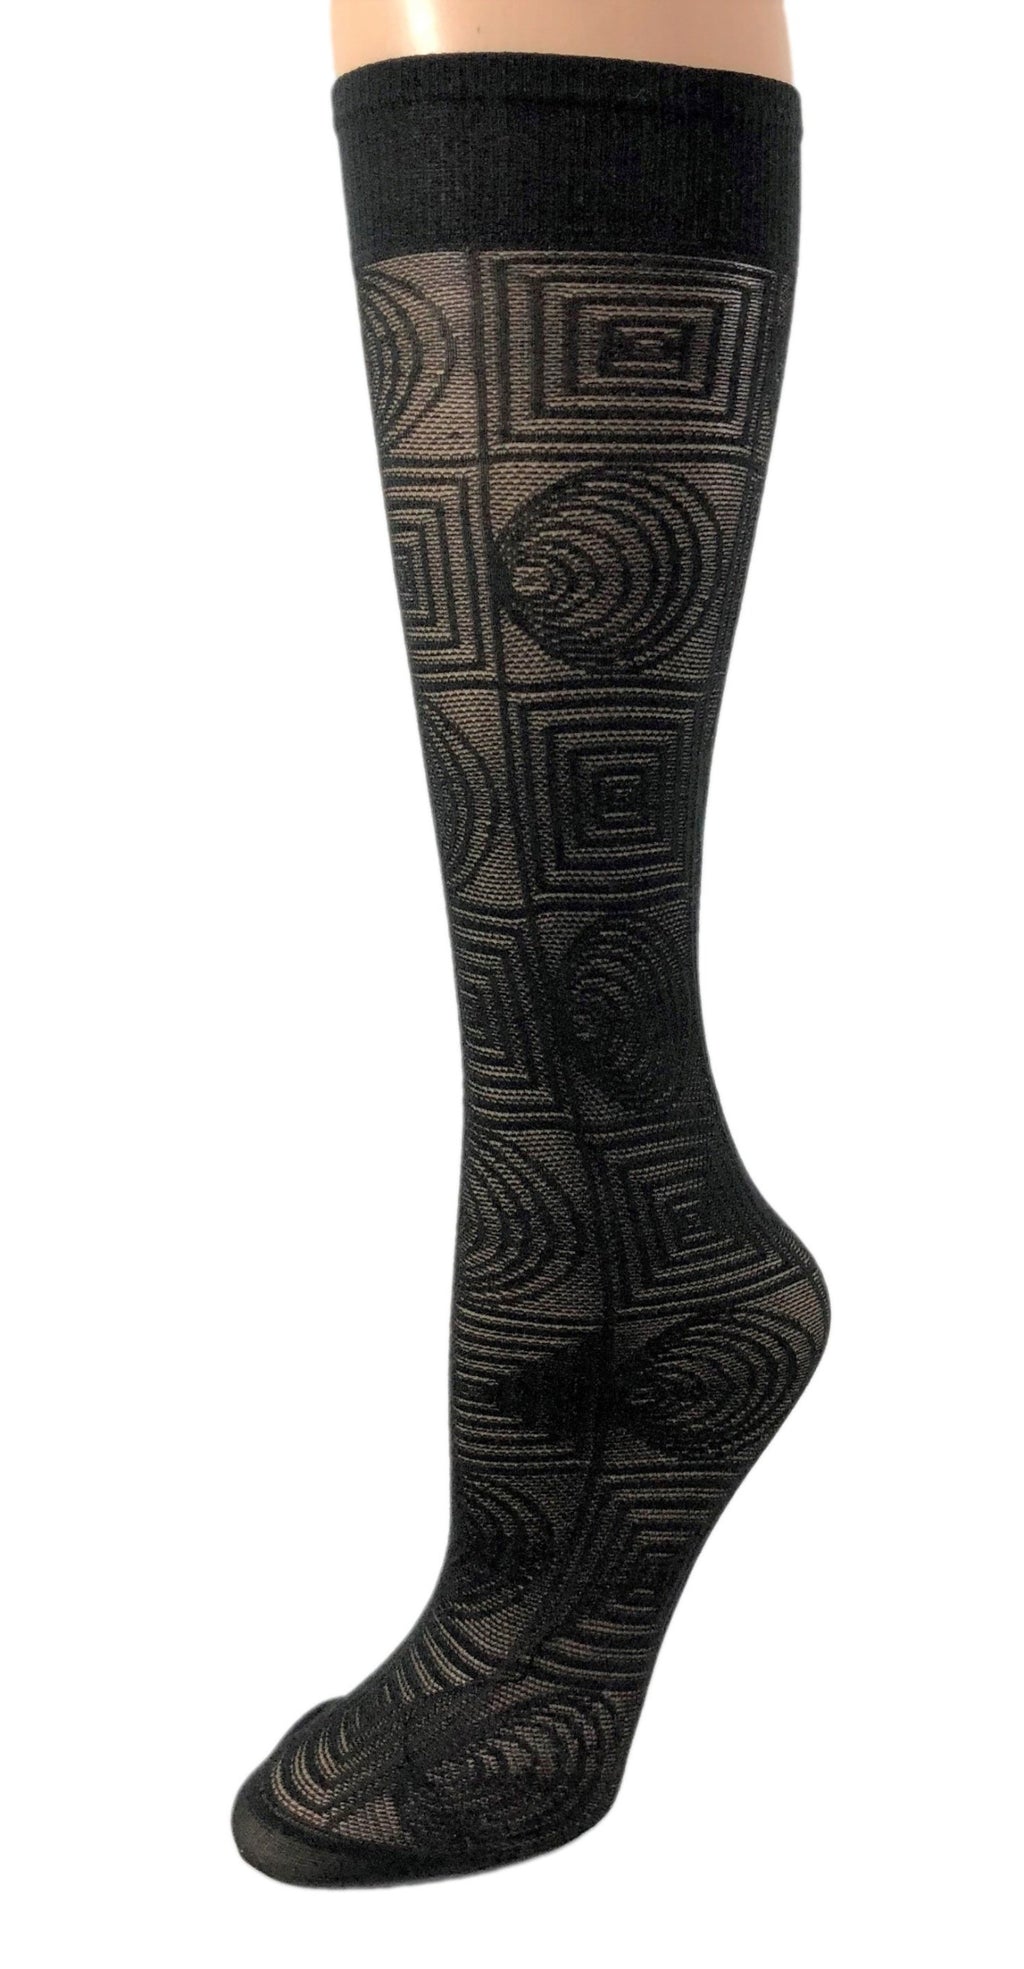 Cute Black knee high Socks - Global Trendz Fashion®